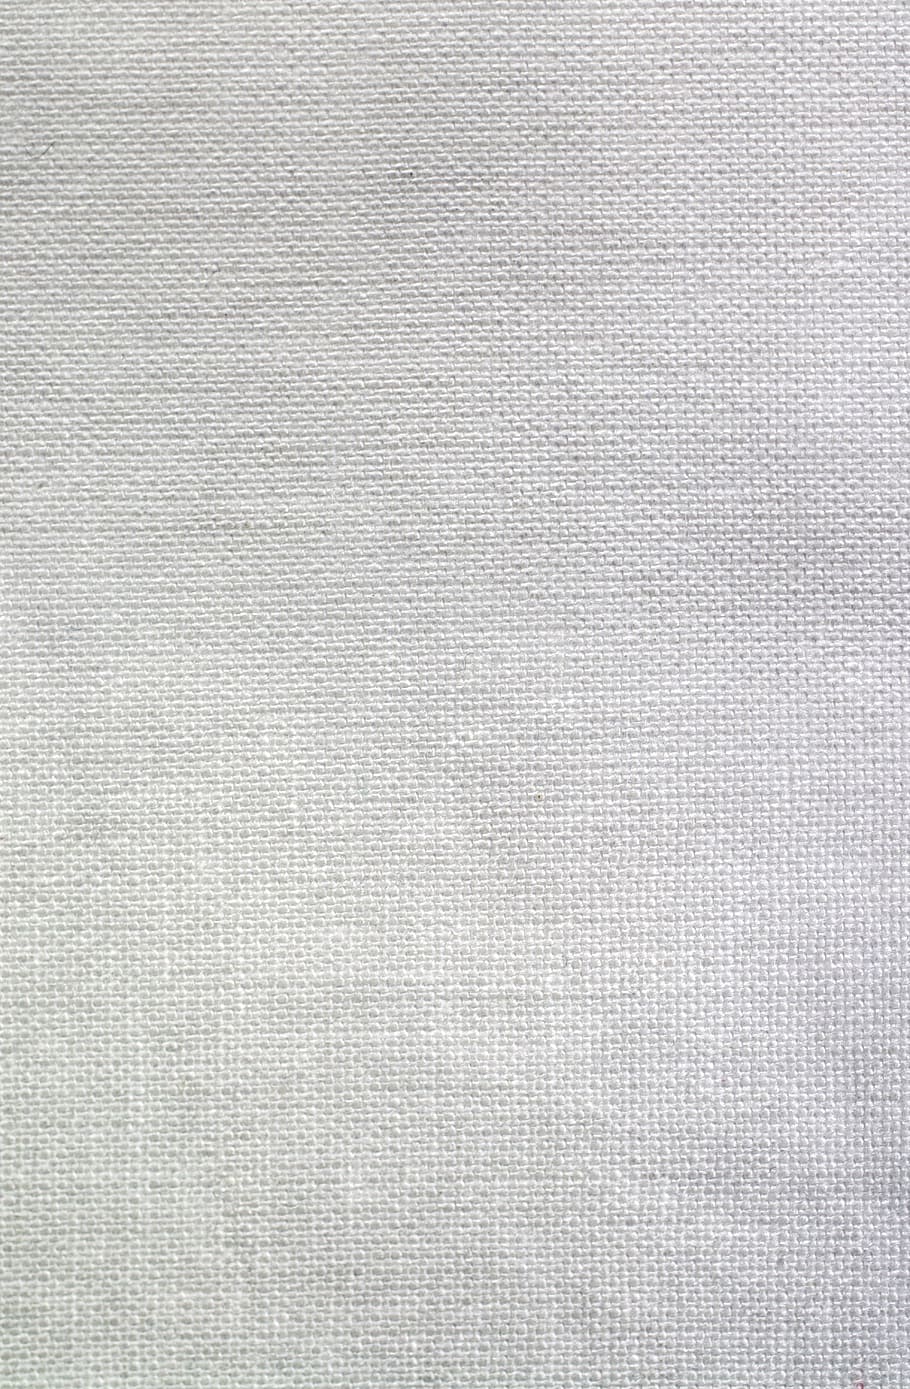 gray textile, canvas, fabric, texture, material, cloth, cotton, textile, surface, textured